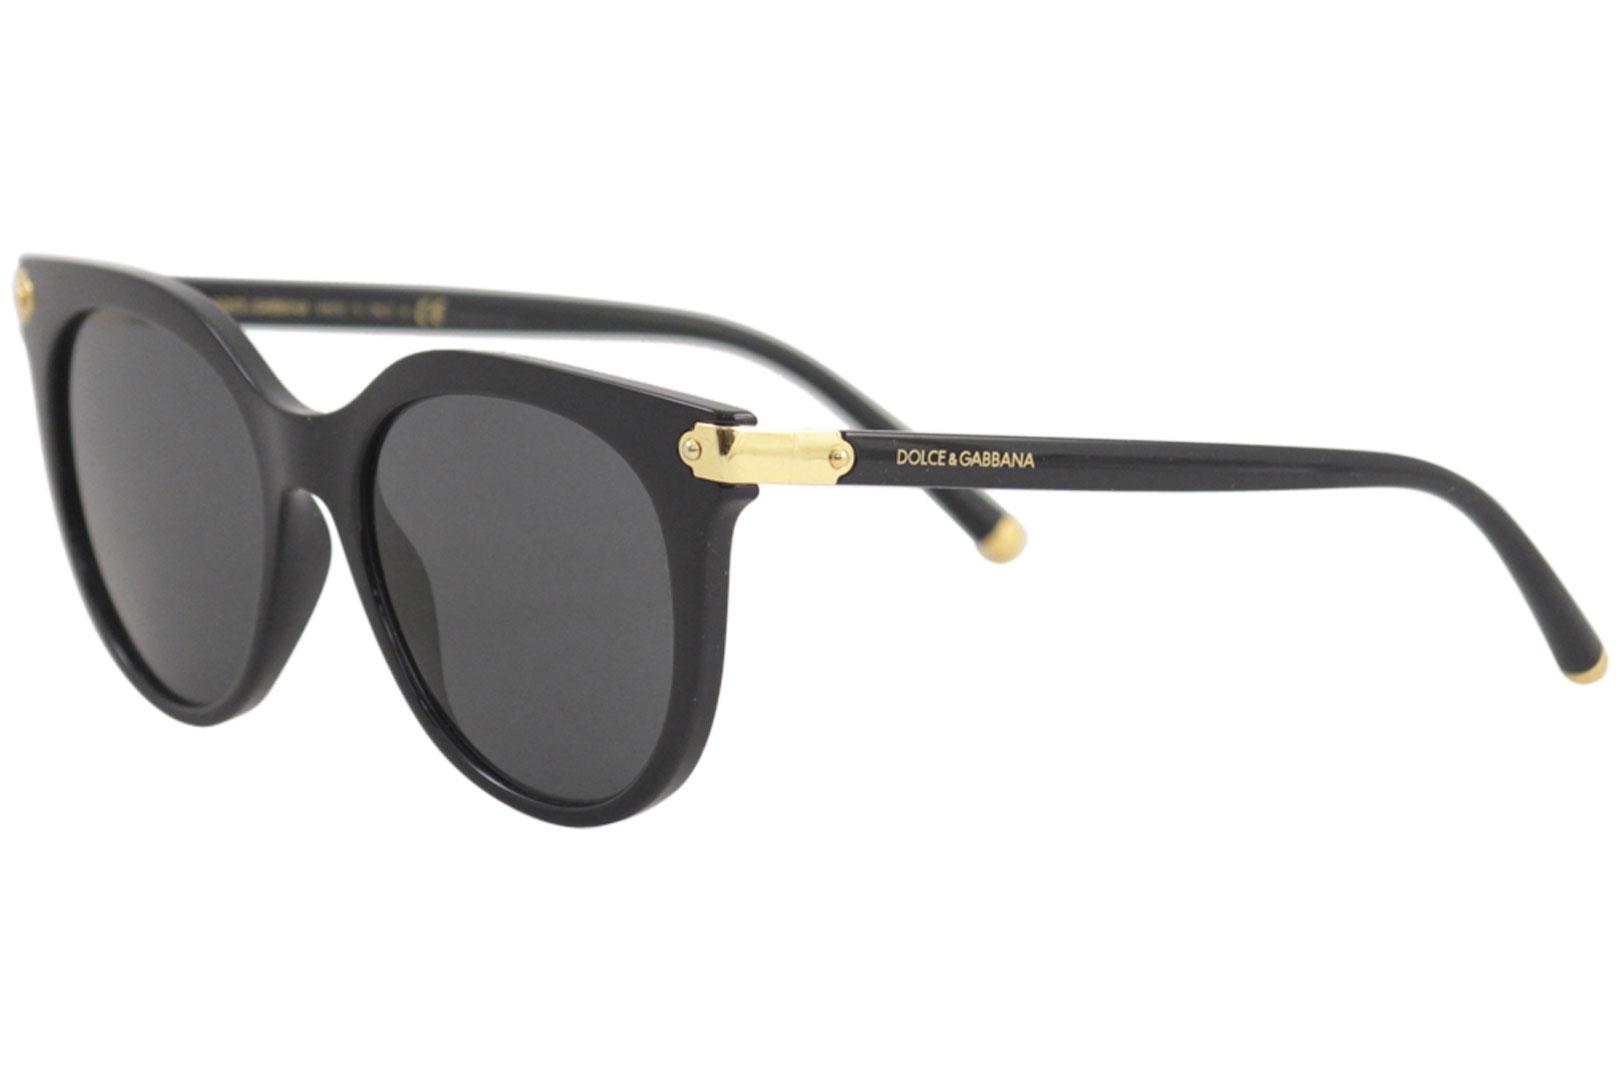 DOLCE & GABBANA DG6117 501 87 Black Grey 52 mm Women's Sunglasses 